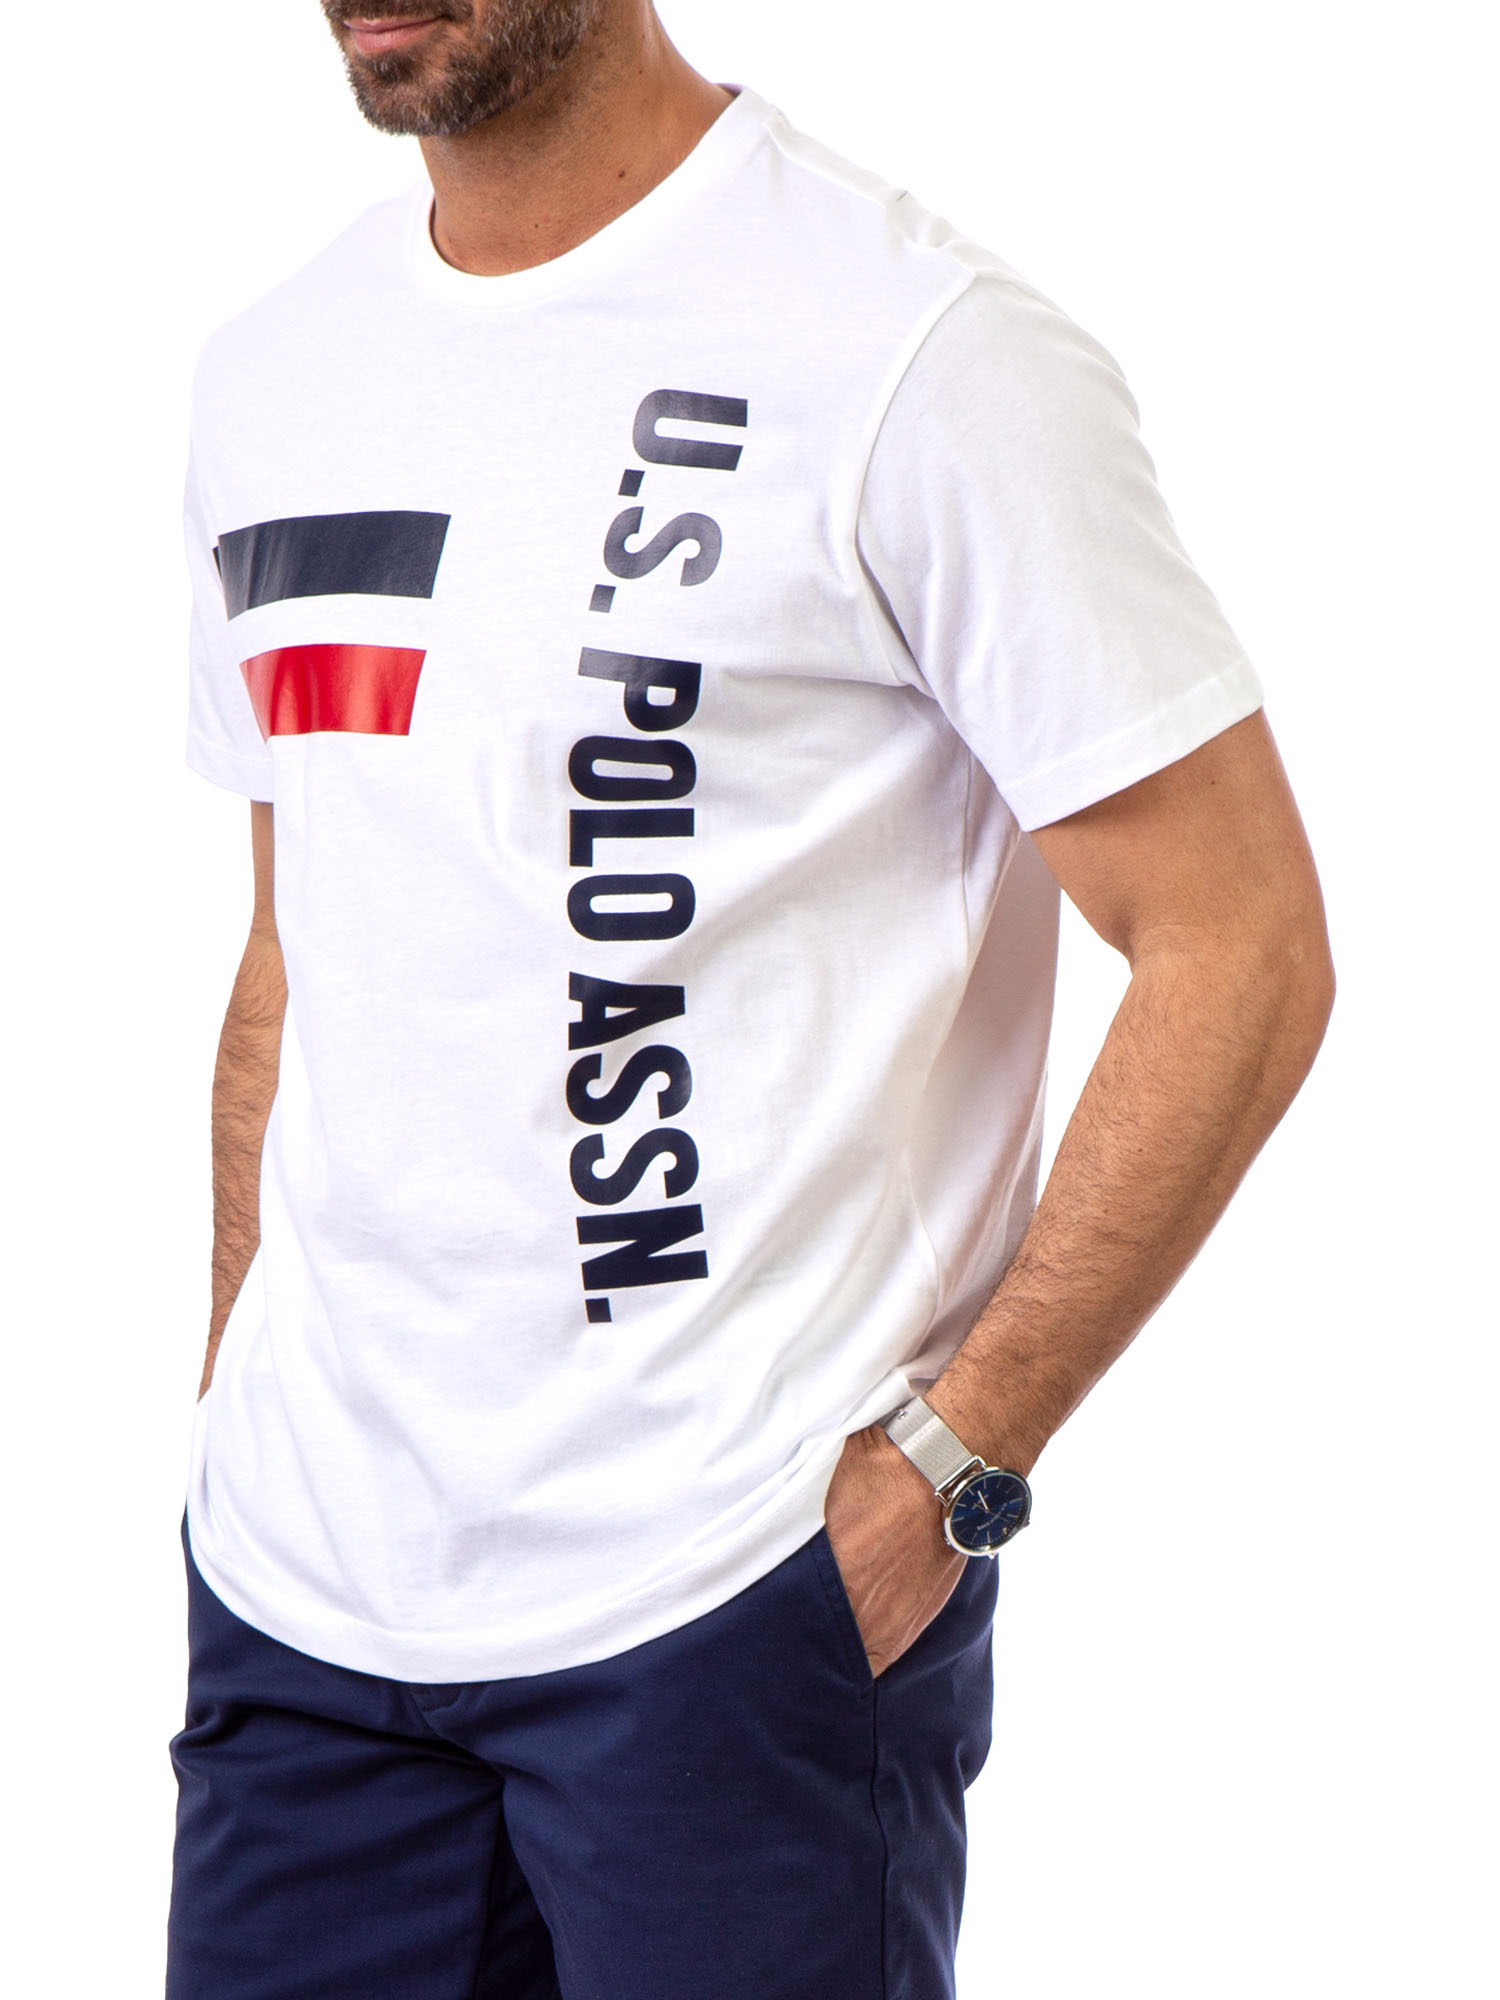 U.S. Polo Assn. Men's Short Sleeve Printed T-Shirt - image 4 of 4